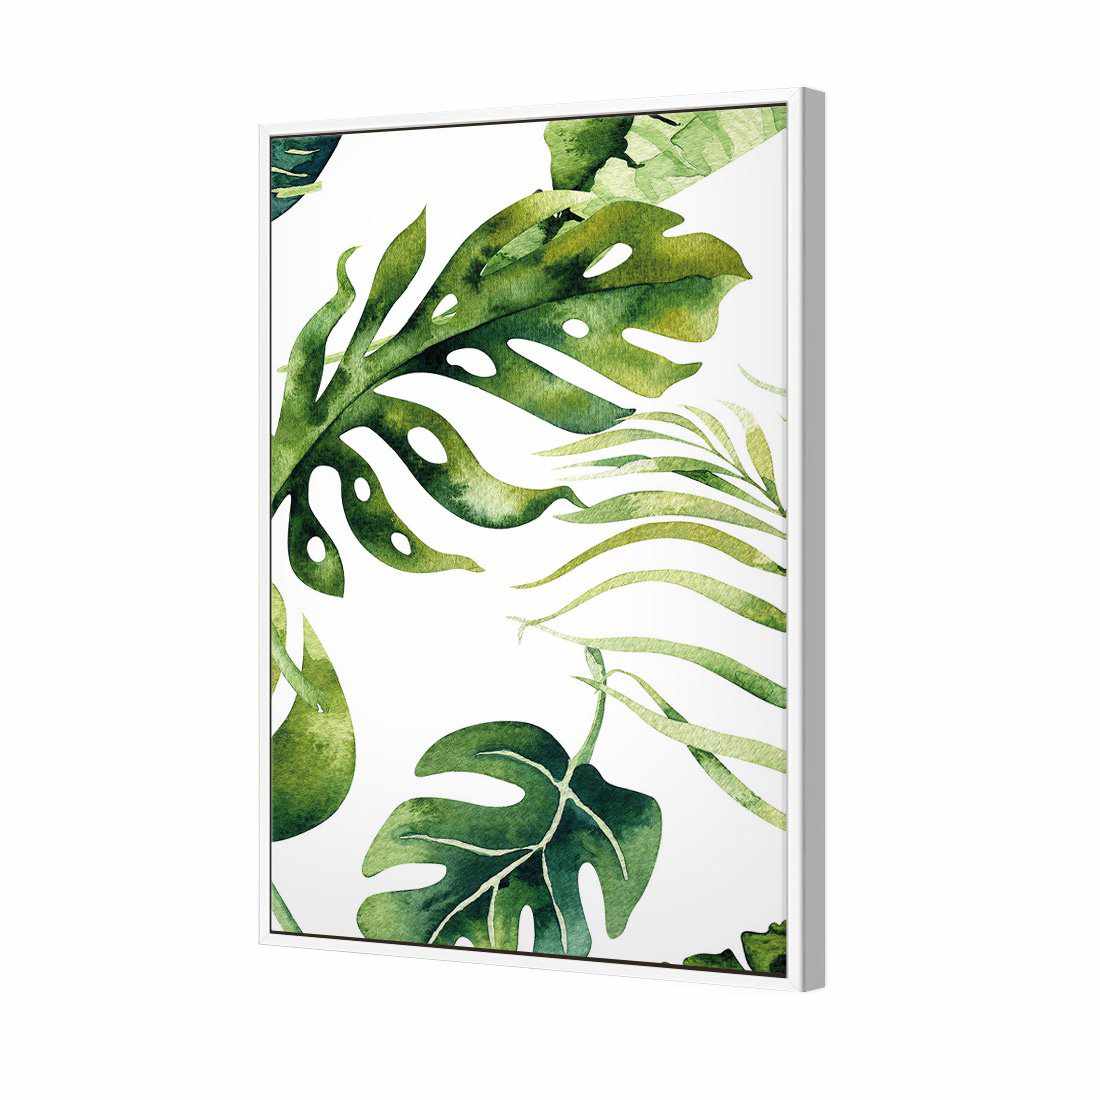 Fascinating Foliage Version 01 Canvas Art-Canvas-Wall Art Designs-45x30cm-Canvas - White Frame-Wall Art Designs